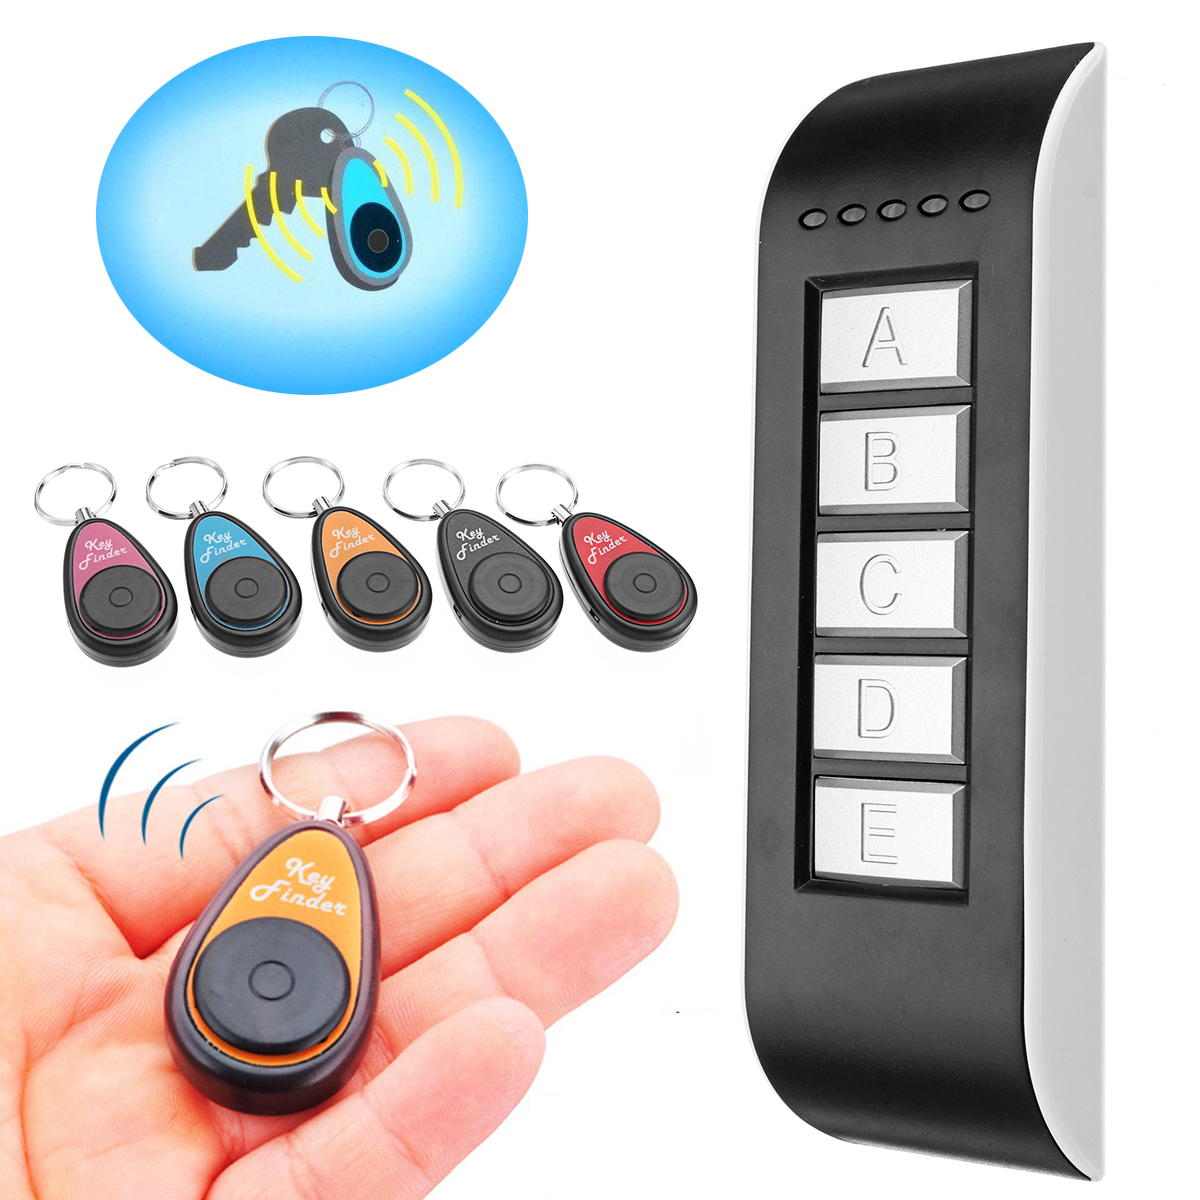 

Glisteny Key Finder, 5 in 1 Wireless Key Chain Tracker Remote Control RF Item Anti Lost Device